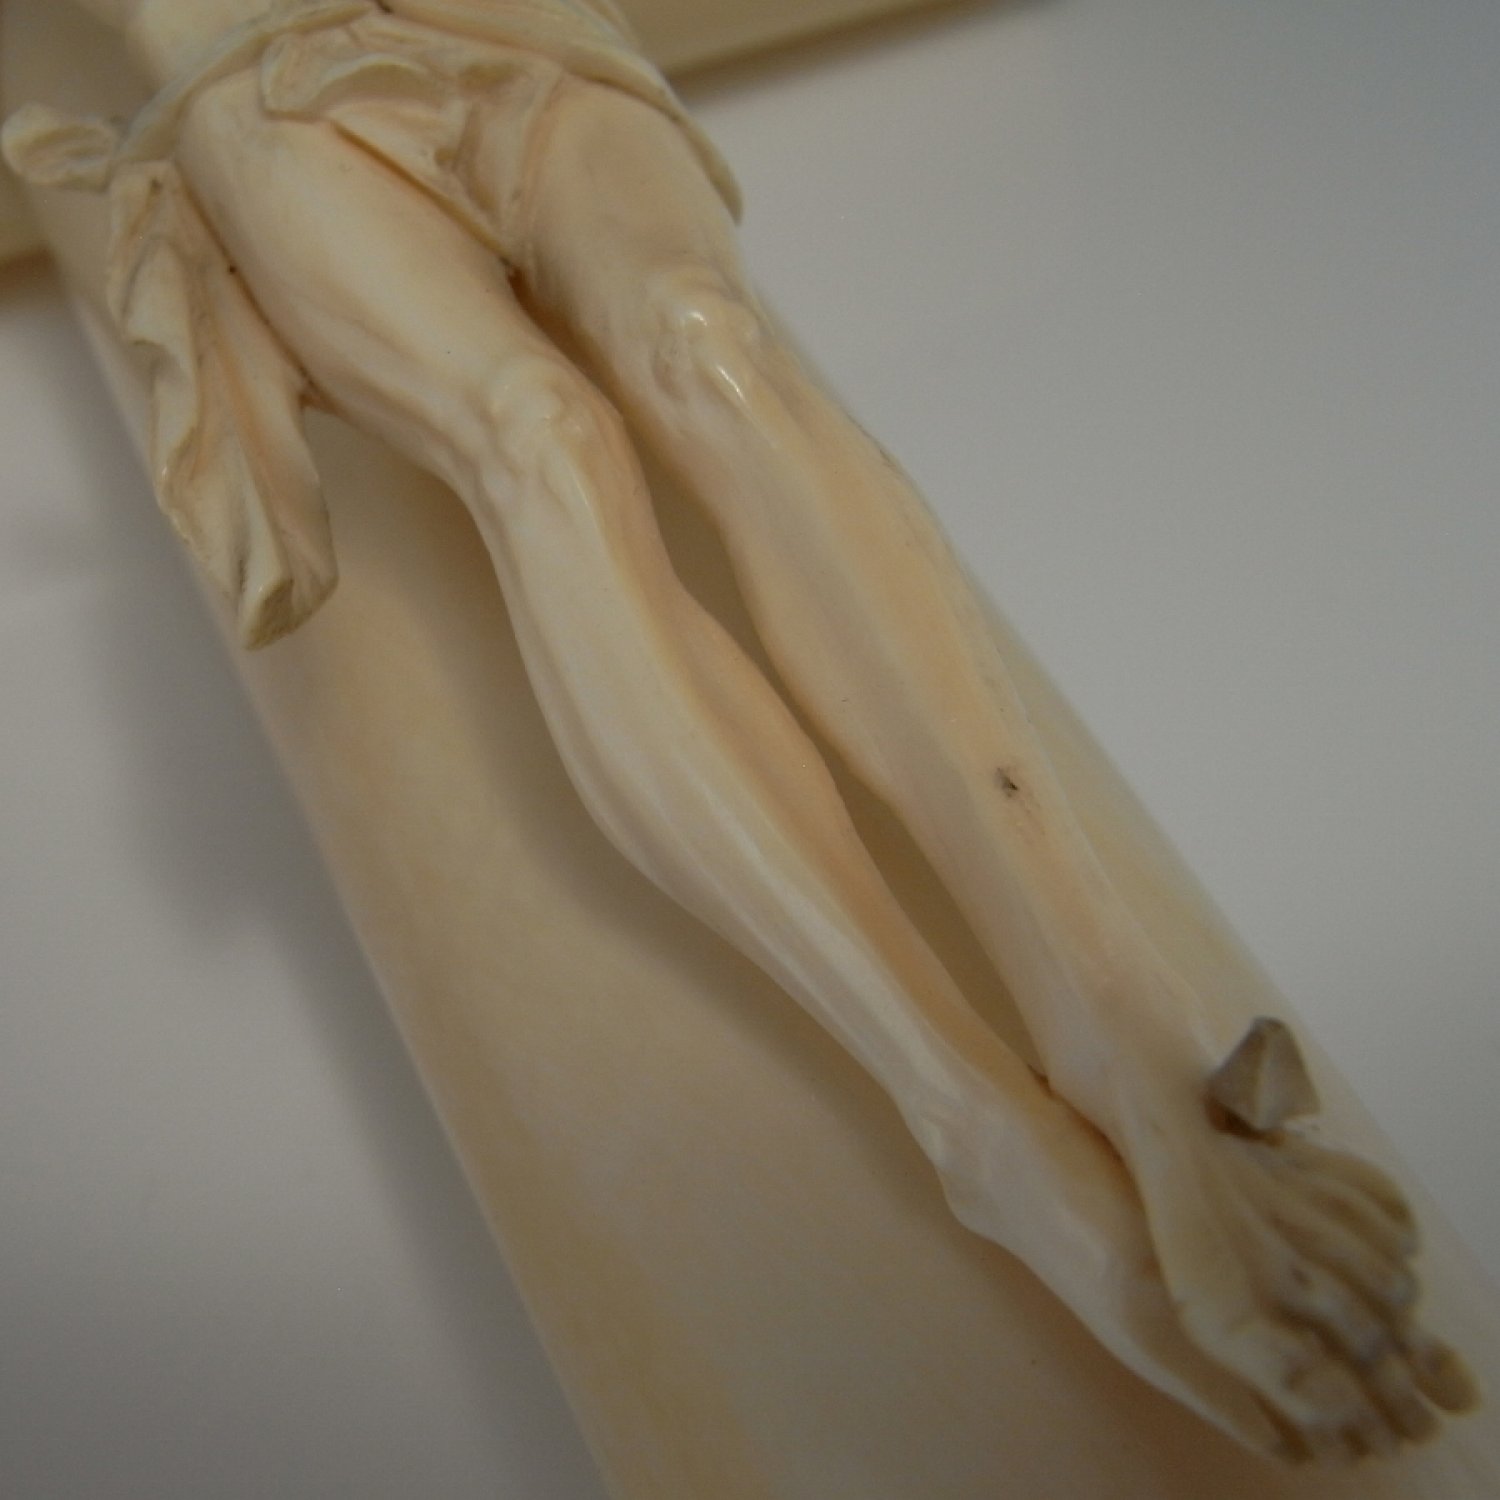 17th Century French Ivory Crucifix 